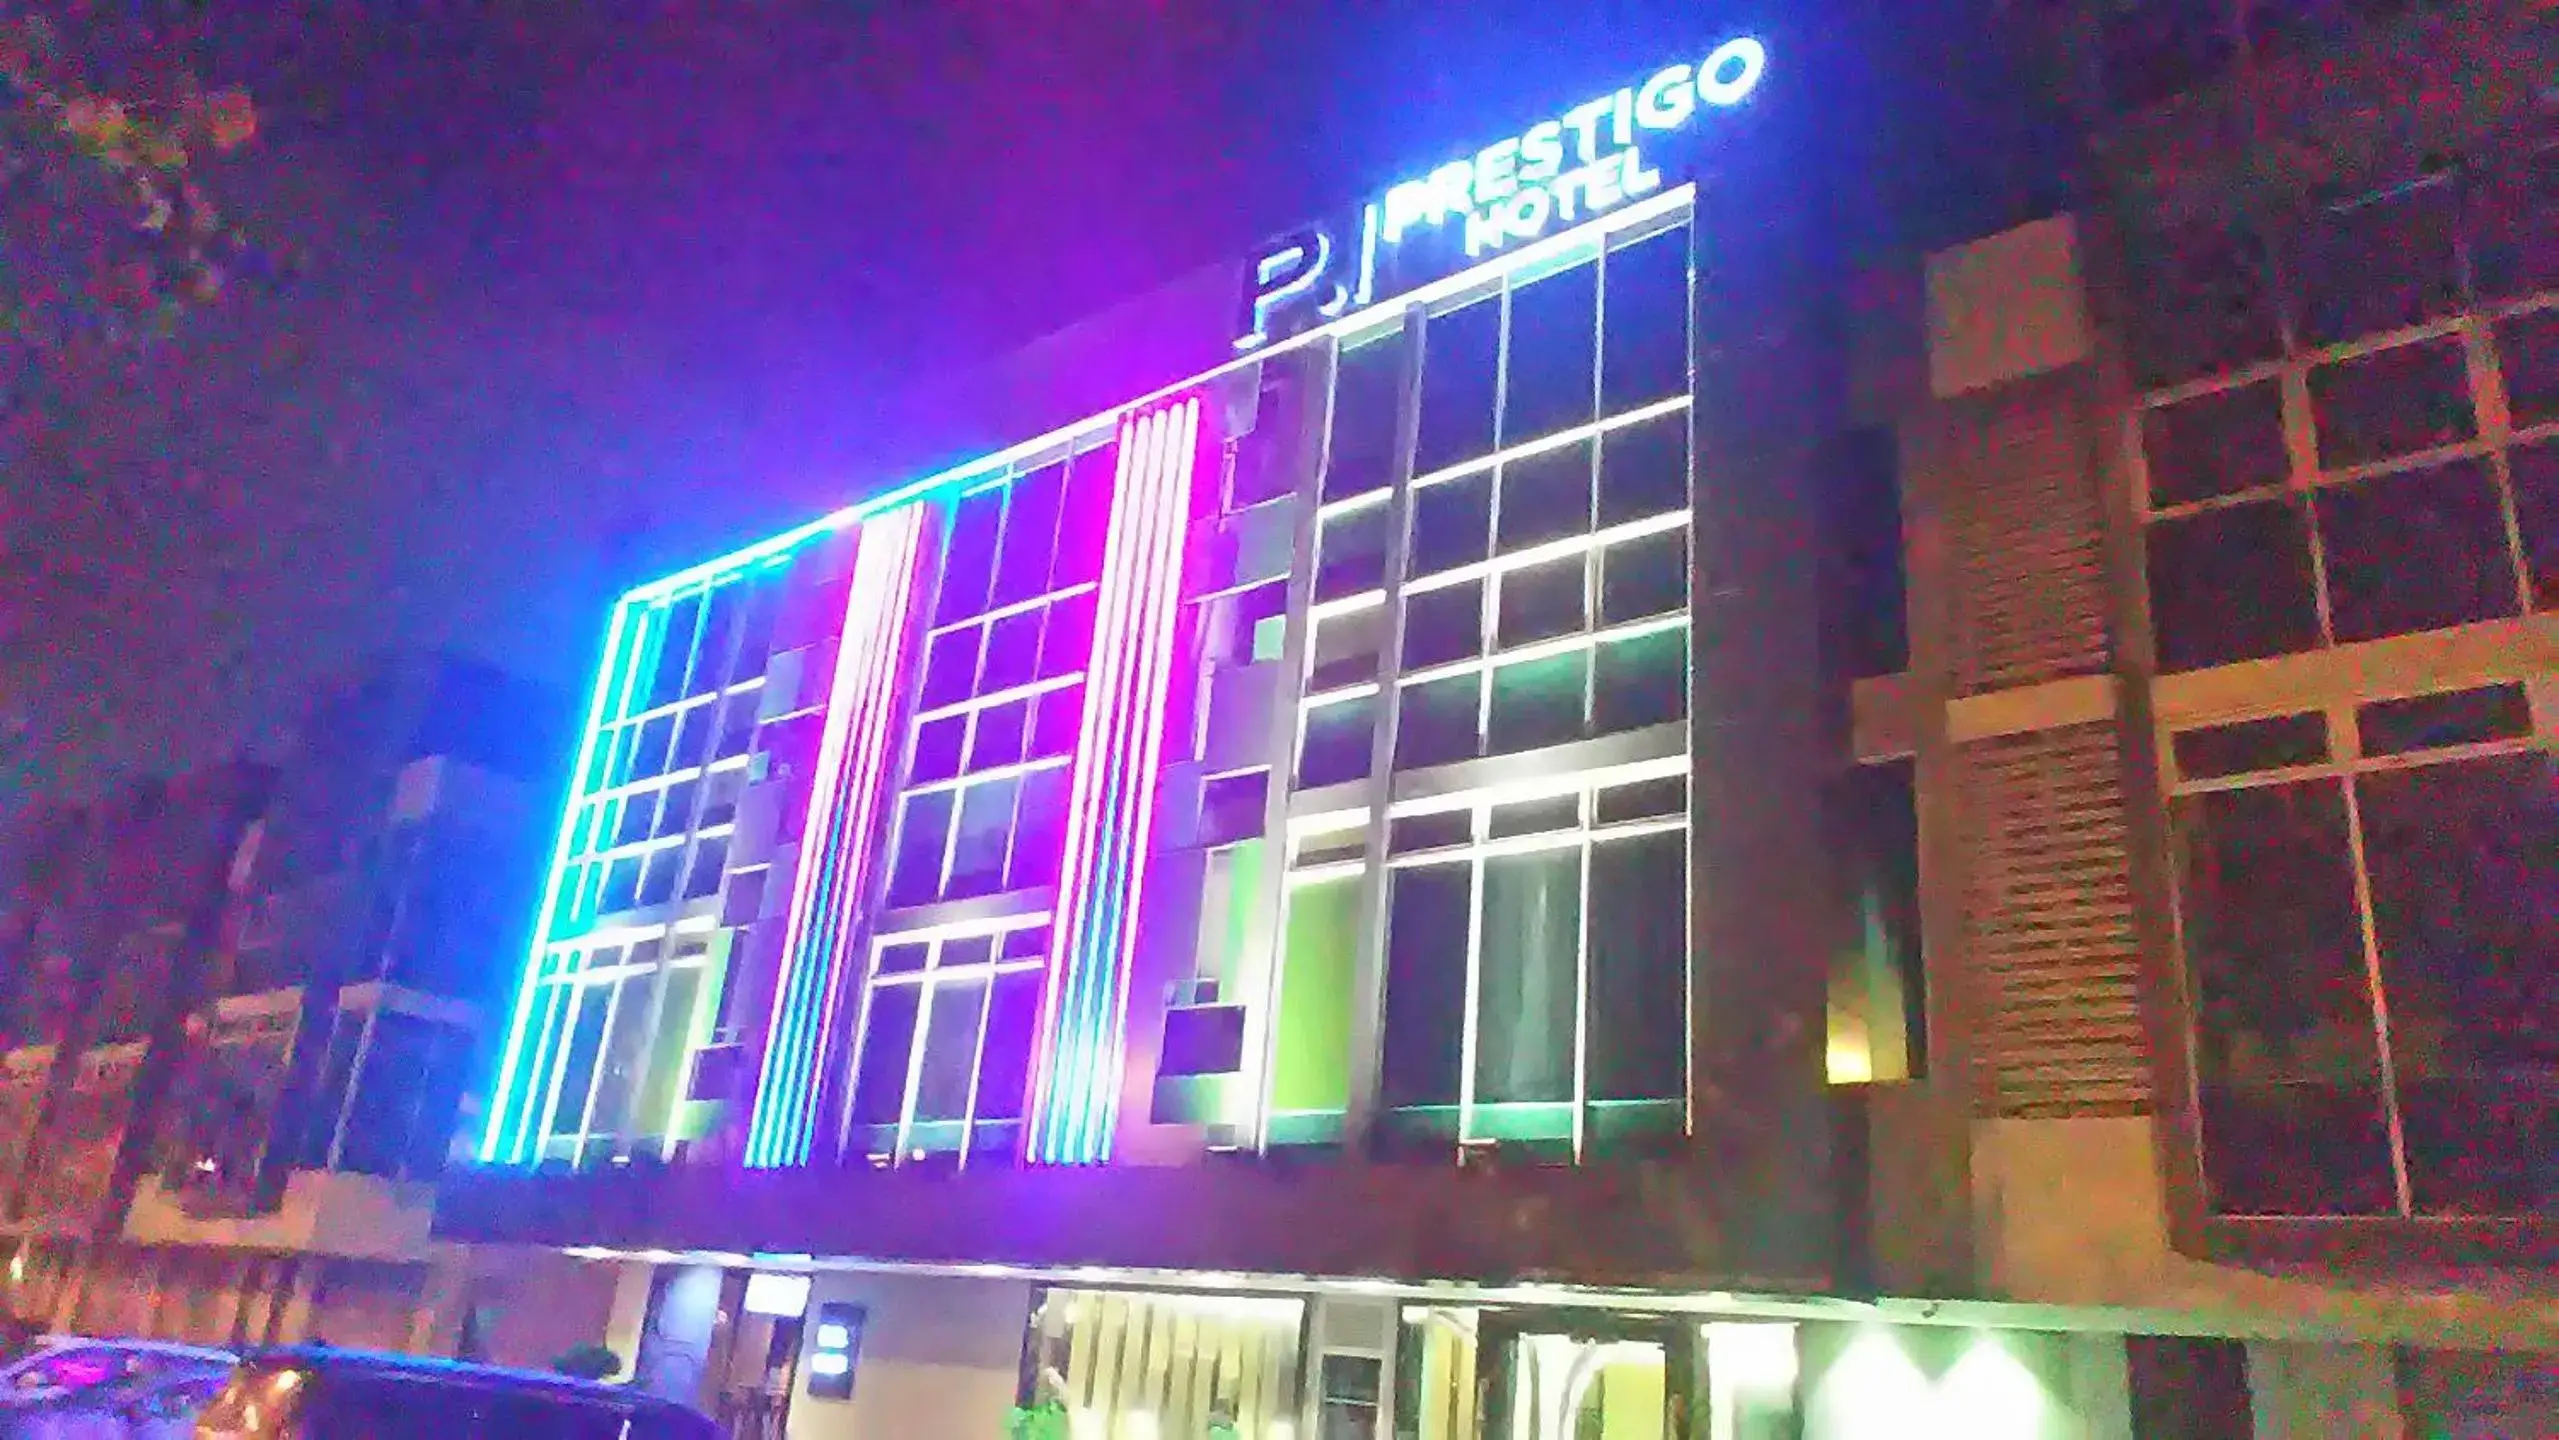 Property Building in Prestigo Hotel - Johor Bharu